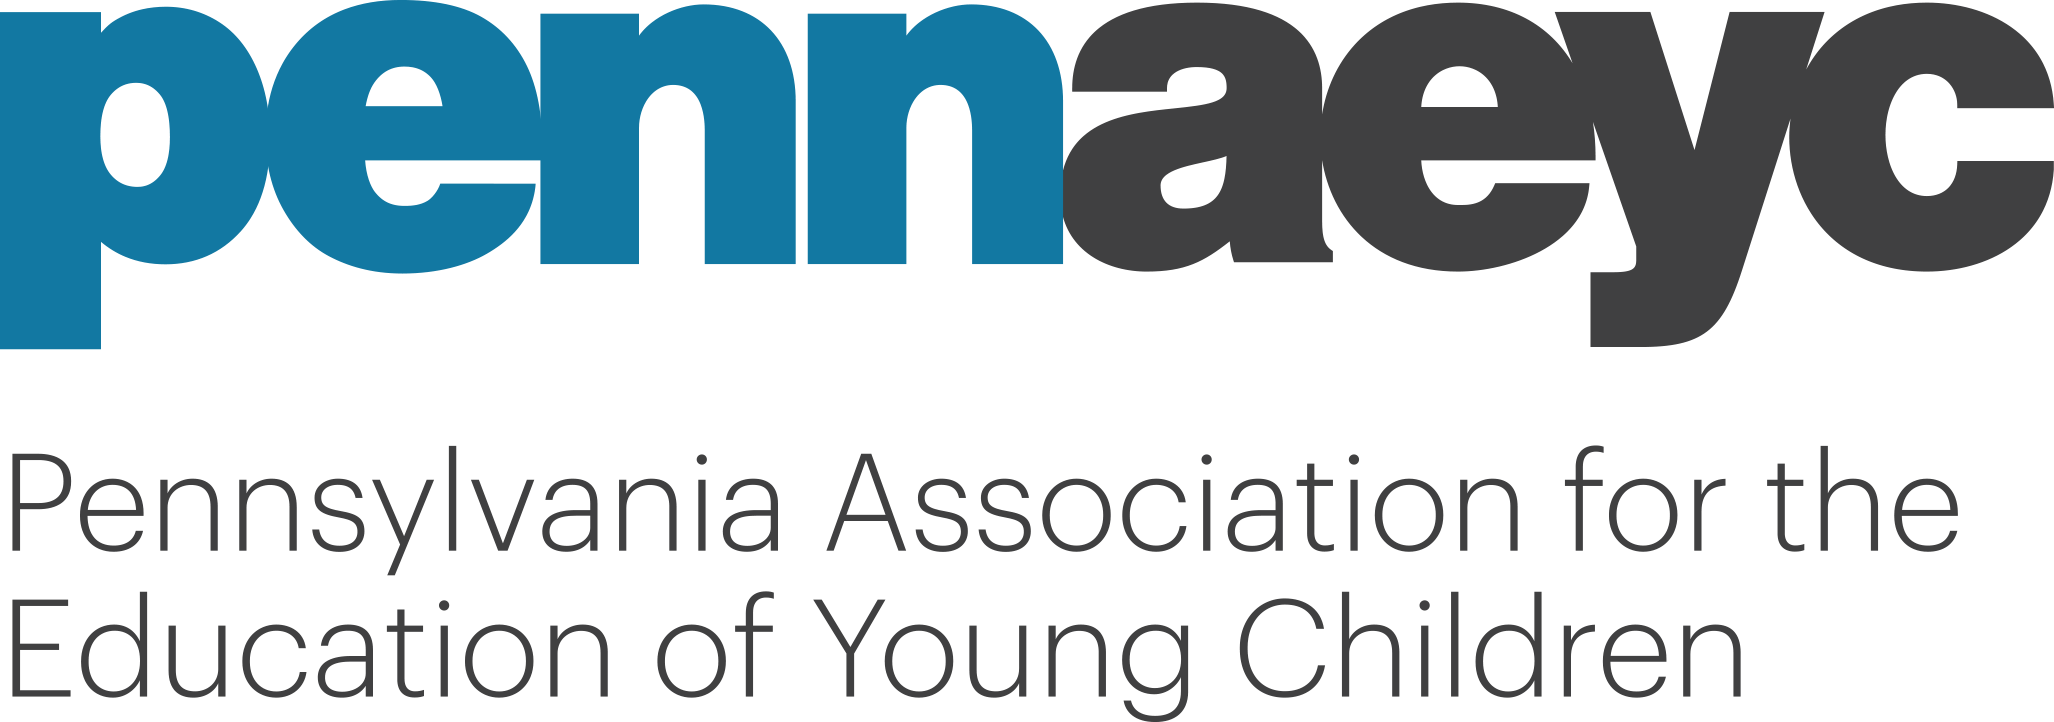 NAEYC Logo - NAEYC Accreditation for Child Care Programs